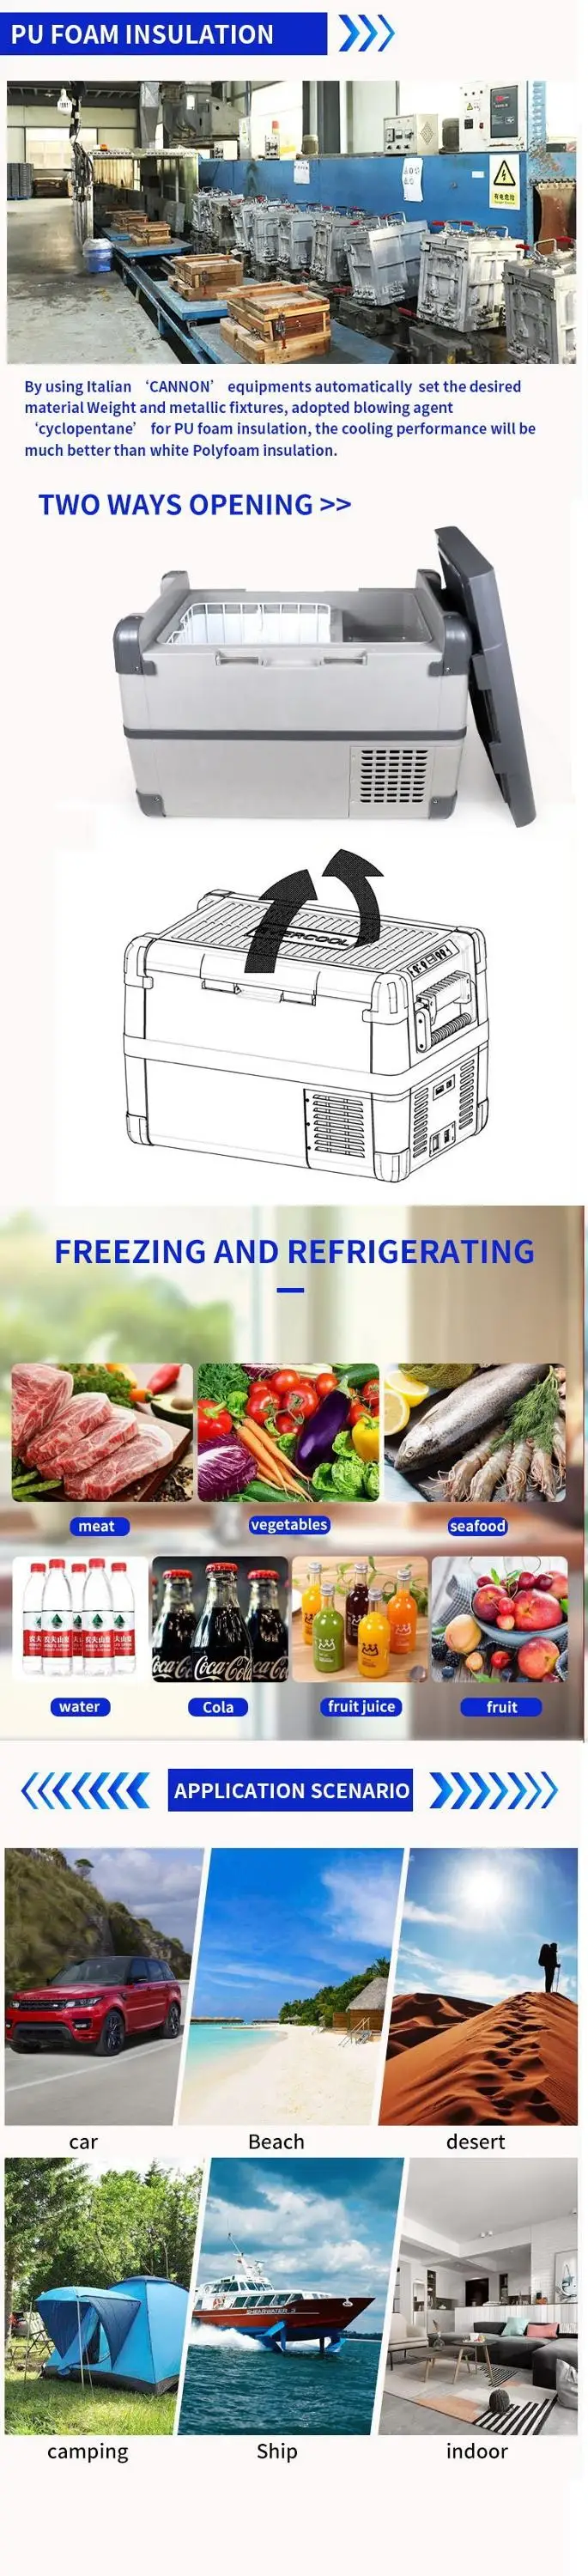 EVERCOOL 28L outing camping solar 4WD electronic refrigerator freezer car fridge (GRAY) 5